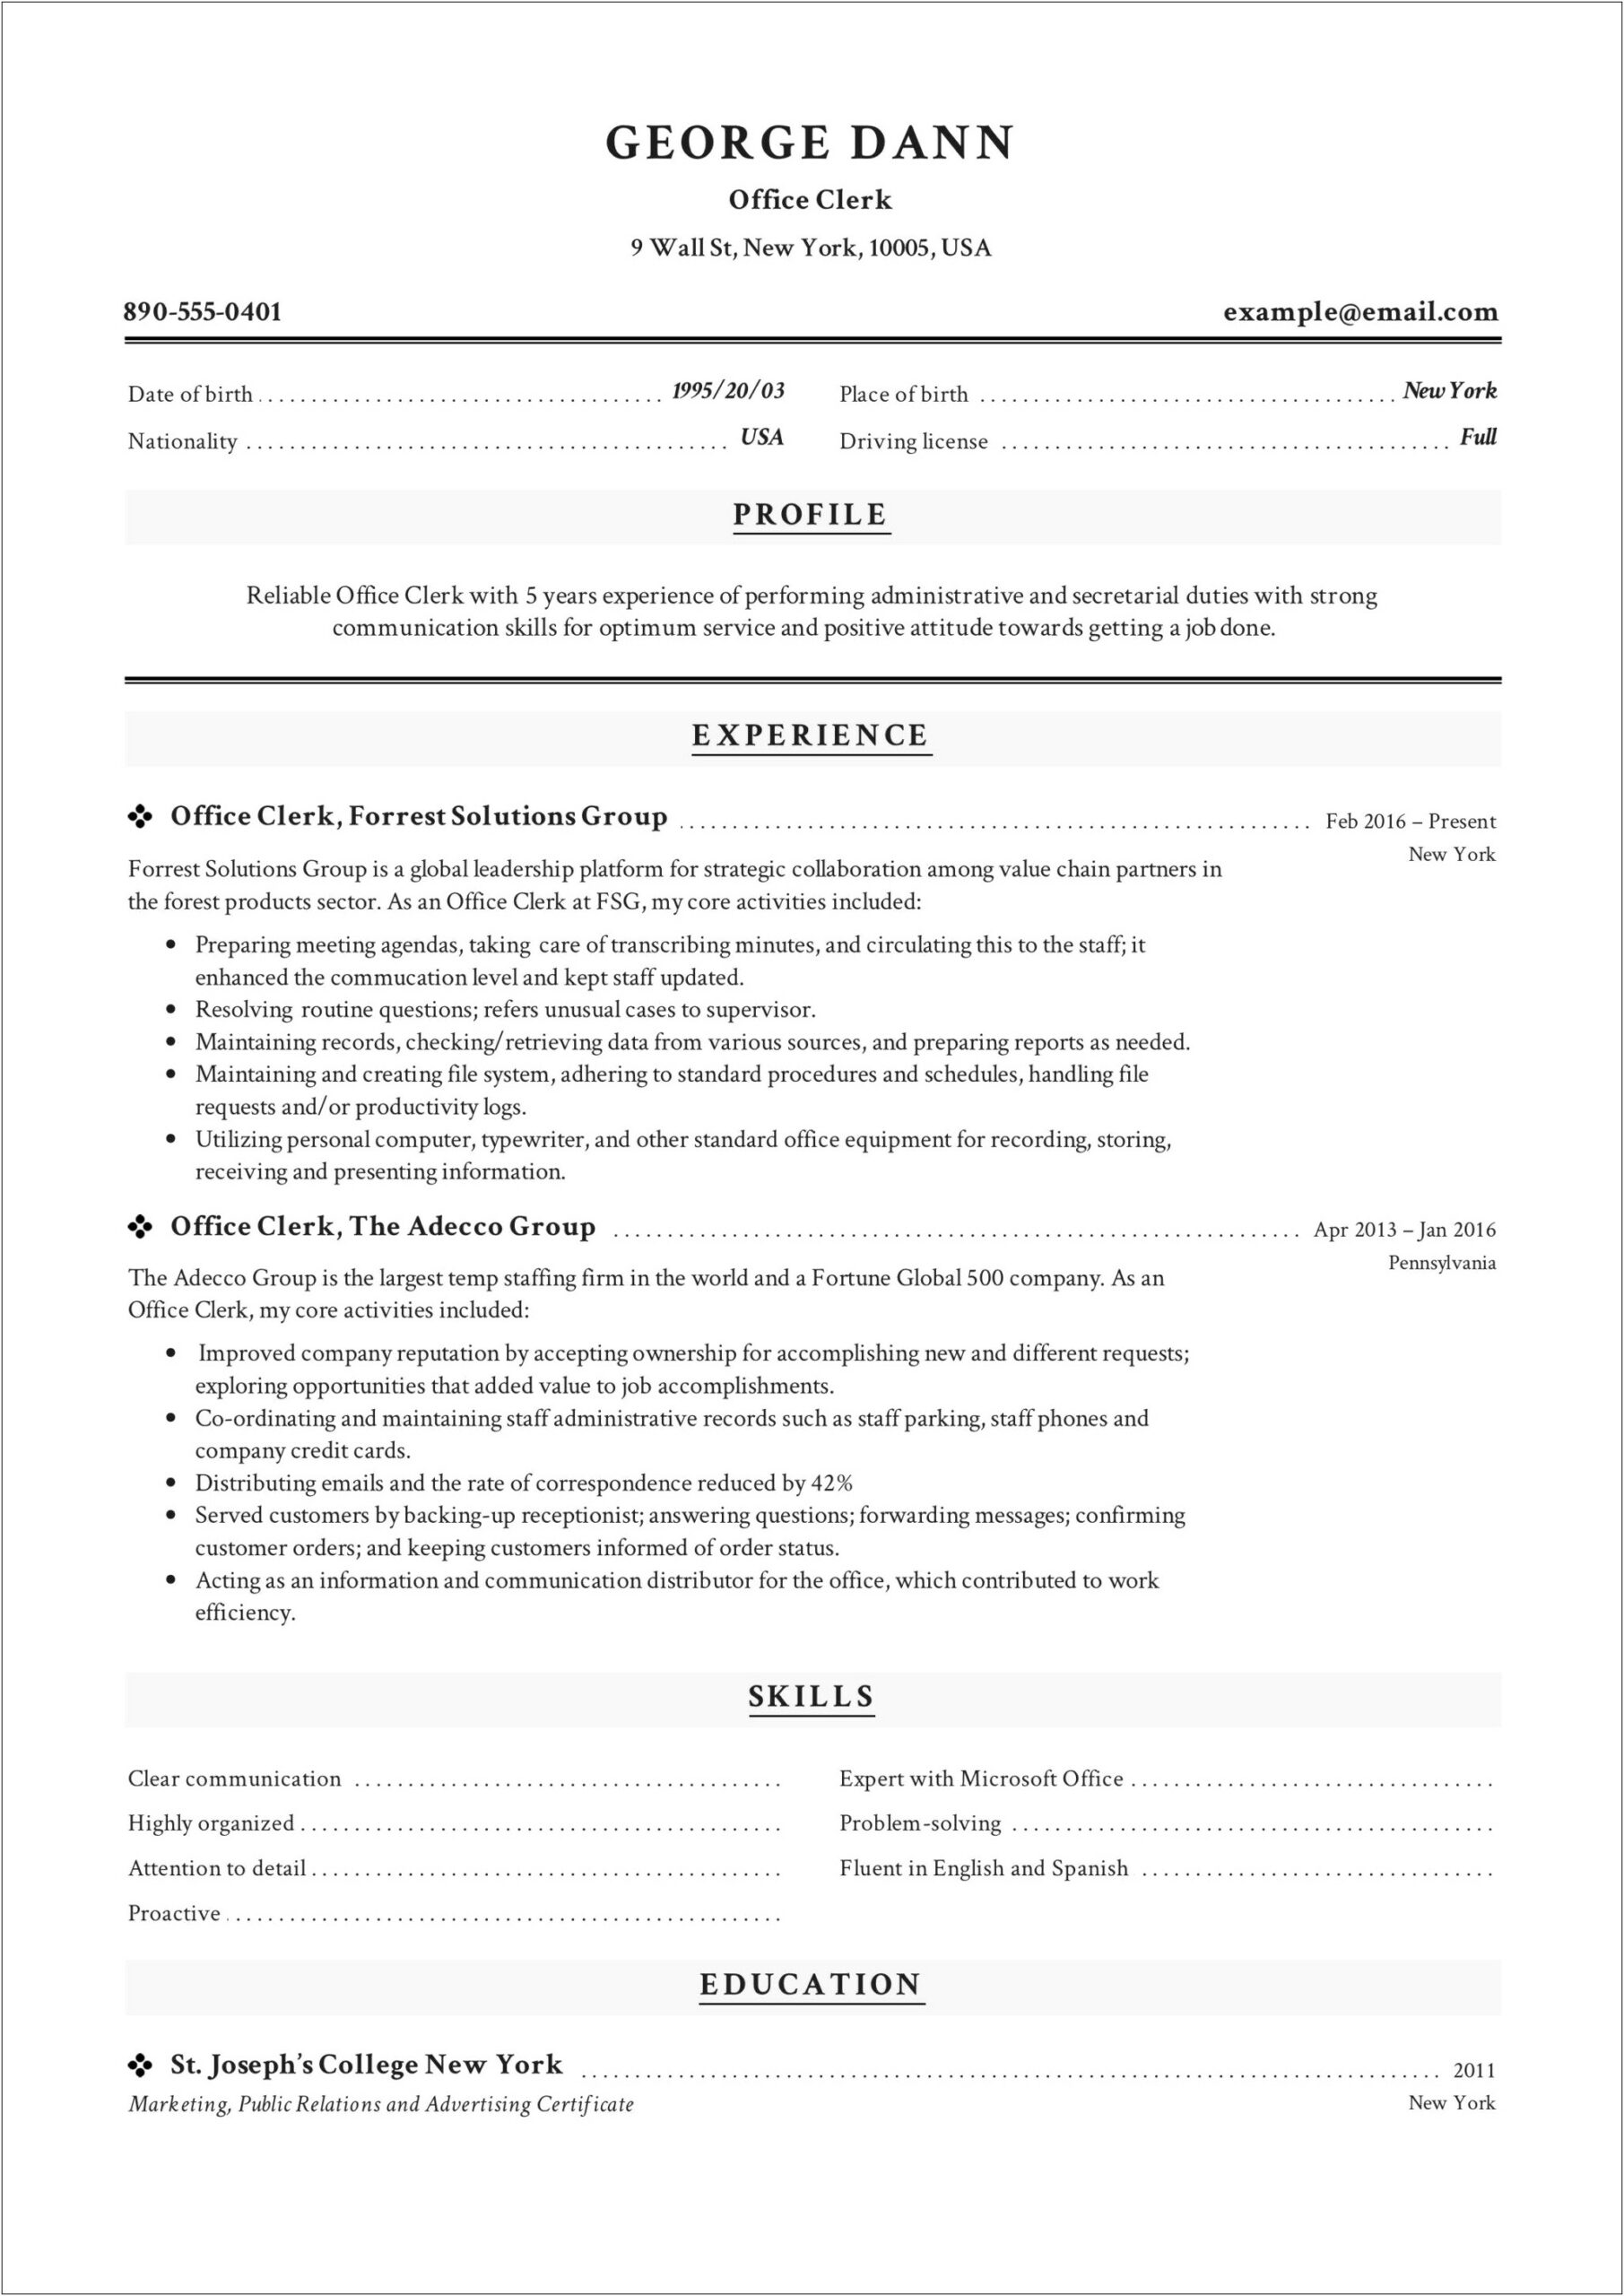 Resume Examples For Office Clerk